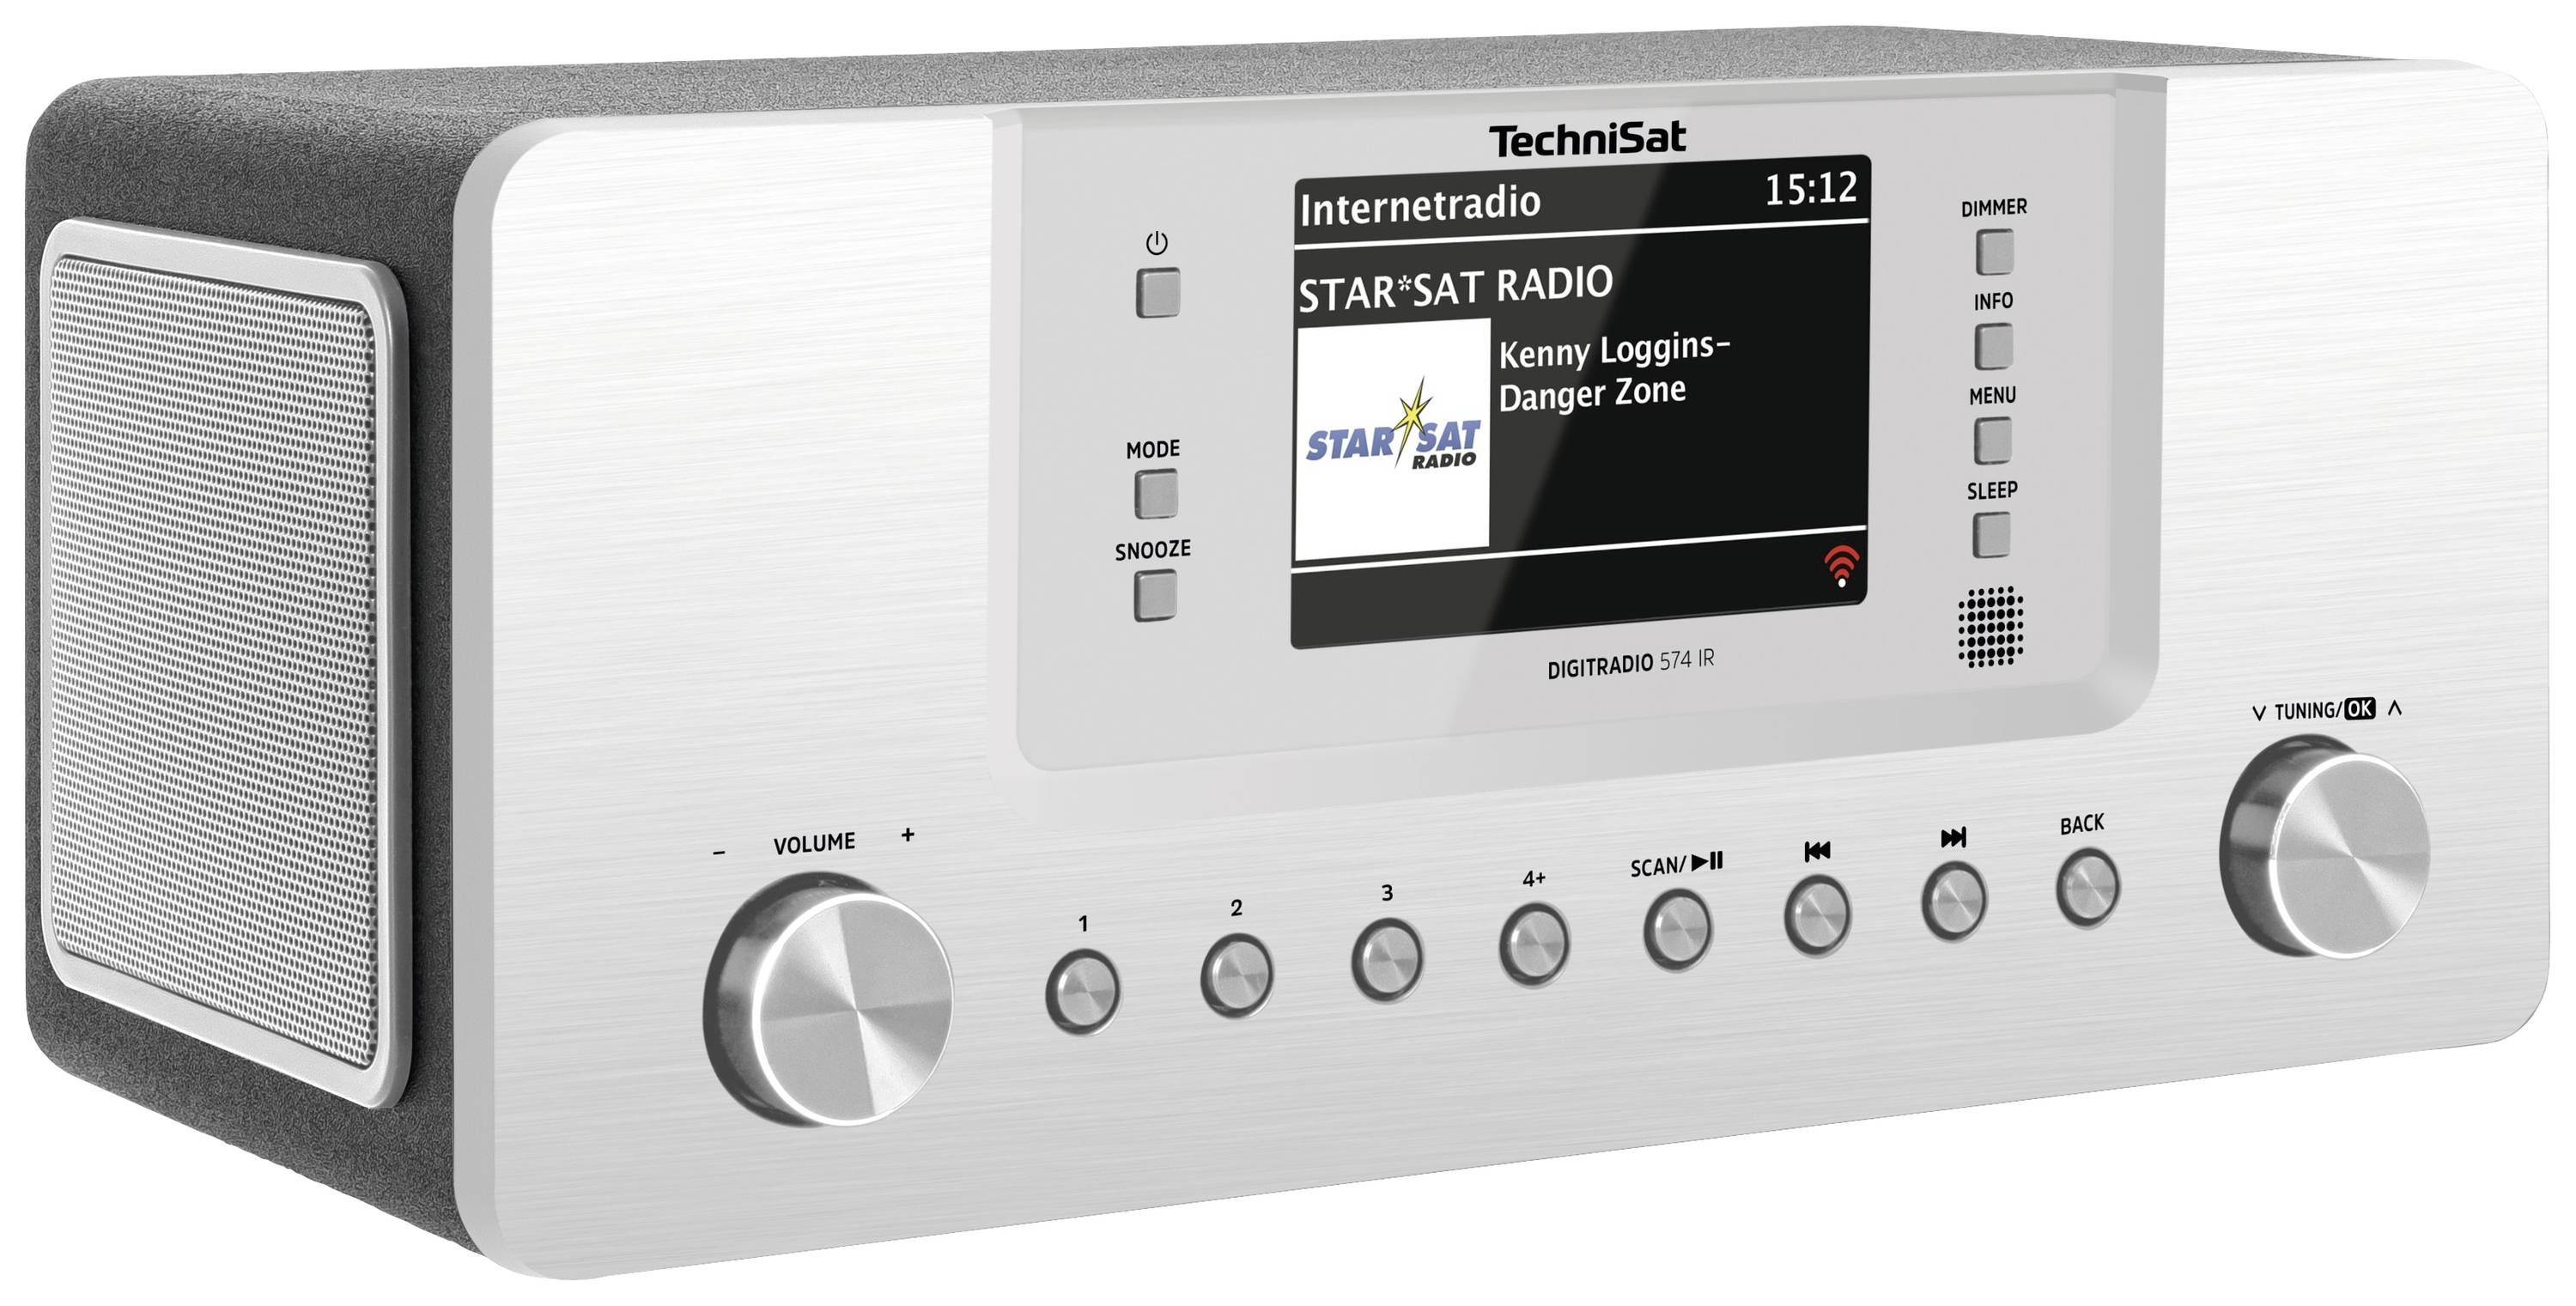 TechniSat Digitradio 574 IR Internet desk radio DAB+, FM AUX, Bluetooth, USB Silver | Conrad.com